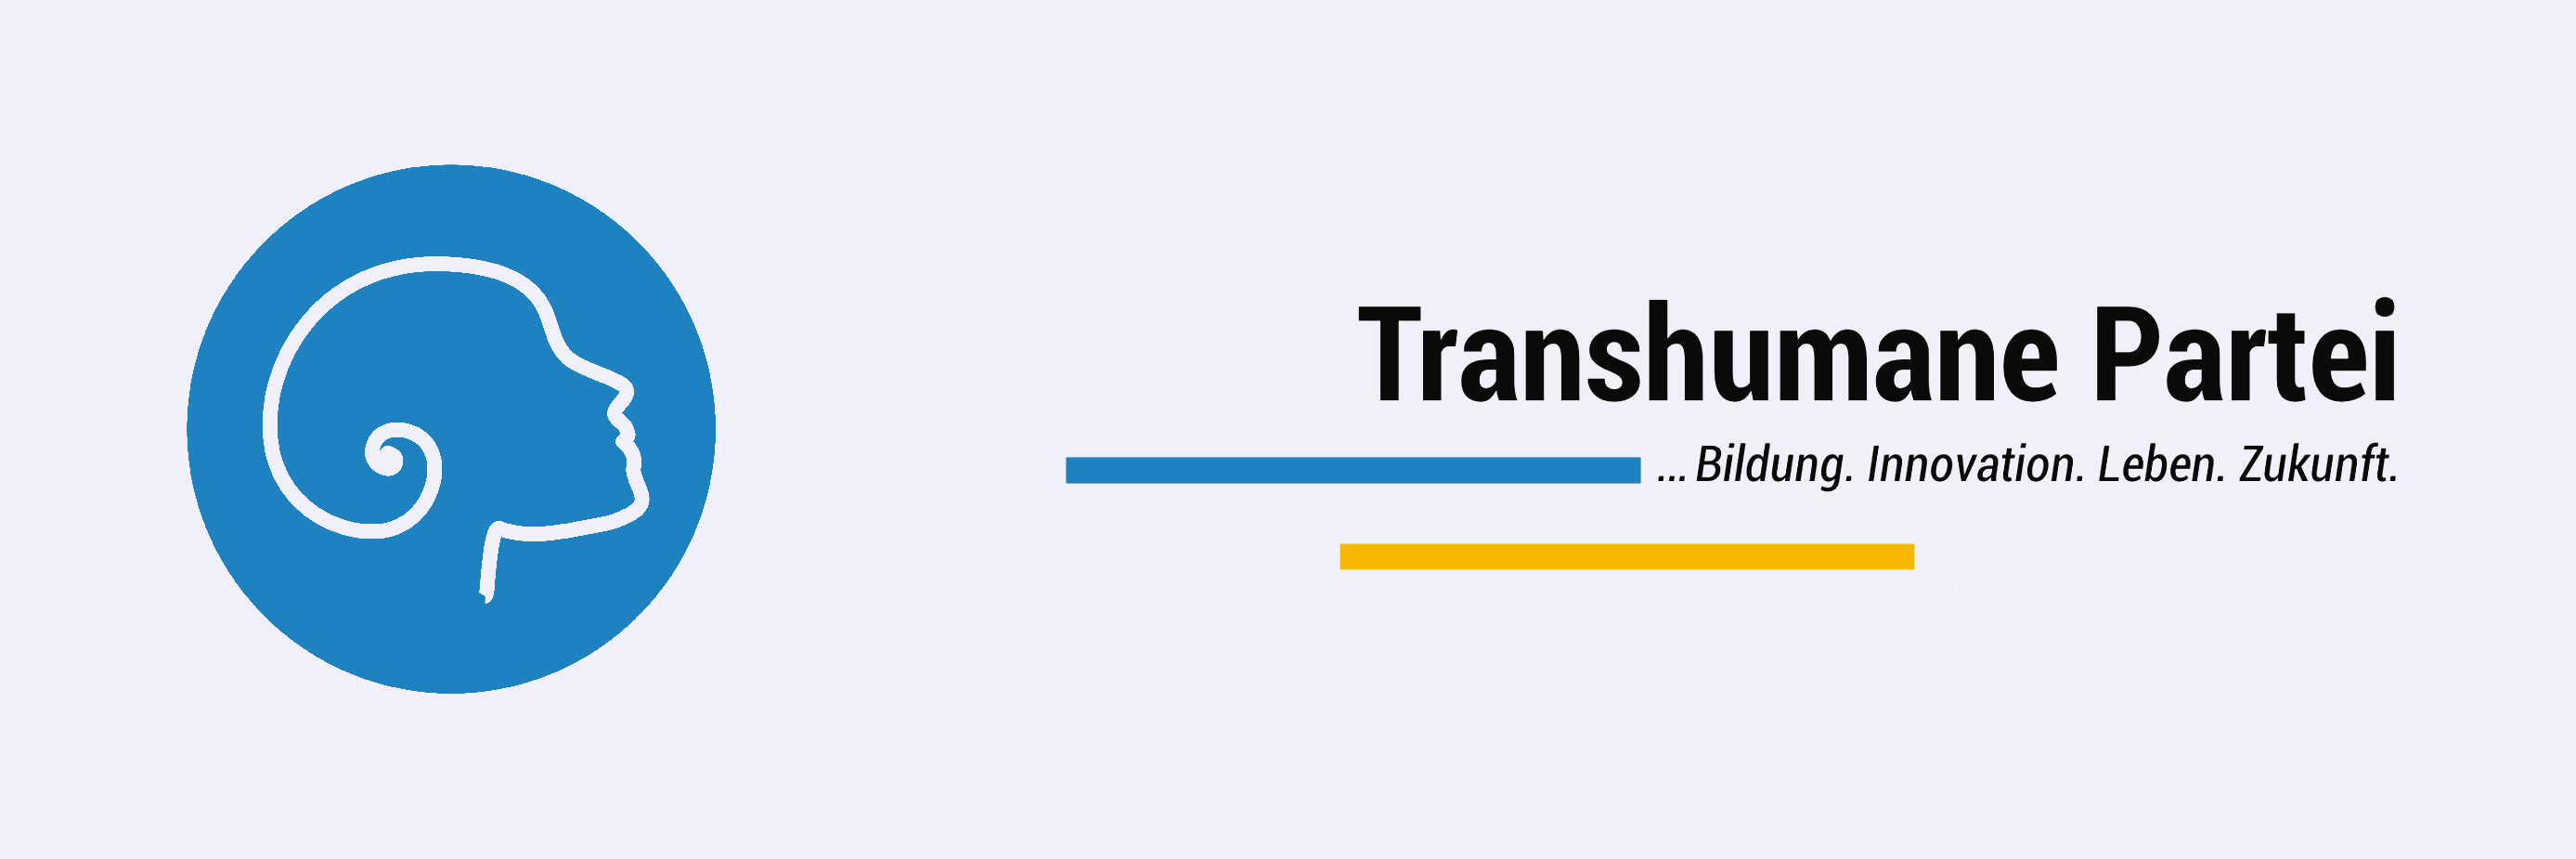 Logos der Transhumanen Partei